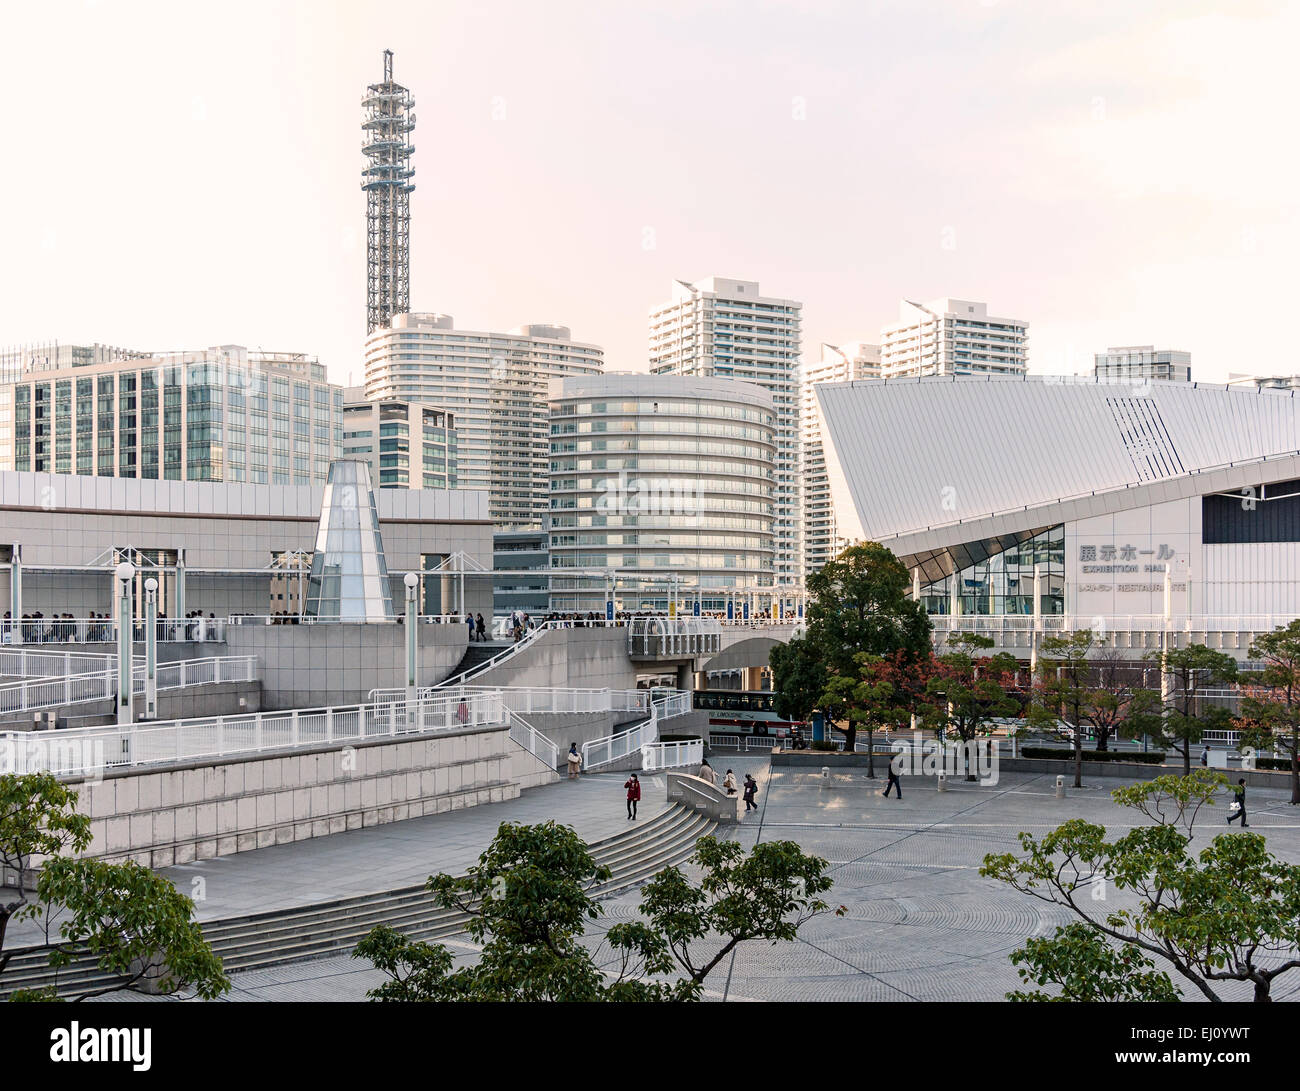 Pacifico Yokohama Convention Center, Minato Mirai 21 district, Yokohama, Kanagawa Prefecture, Japan. Stock Photo